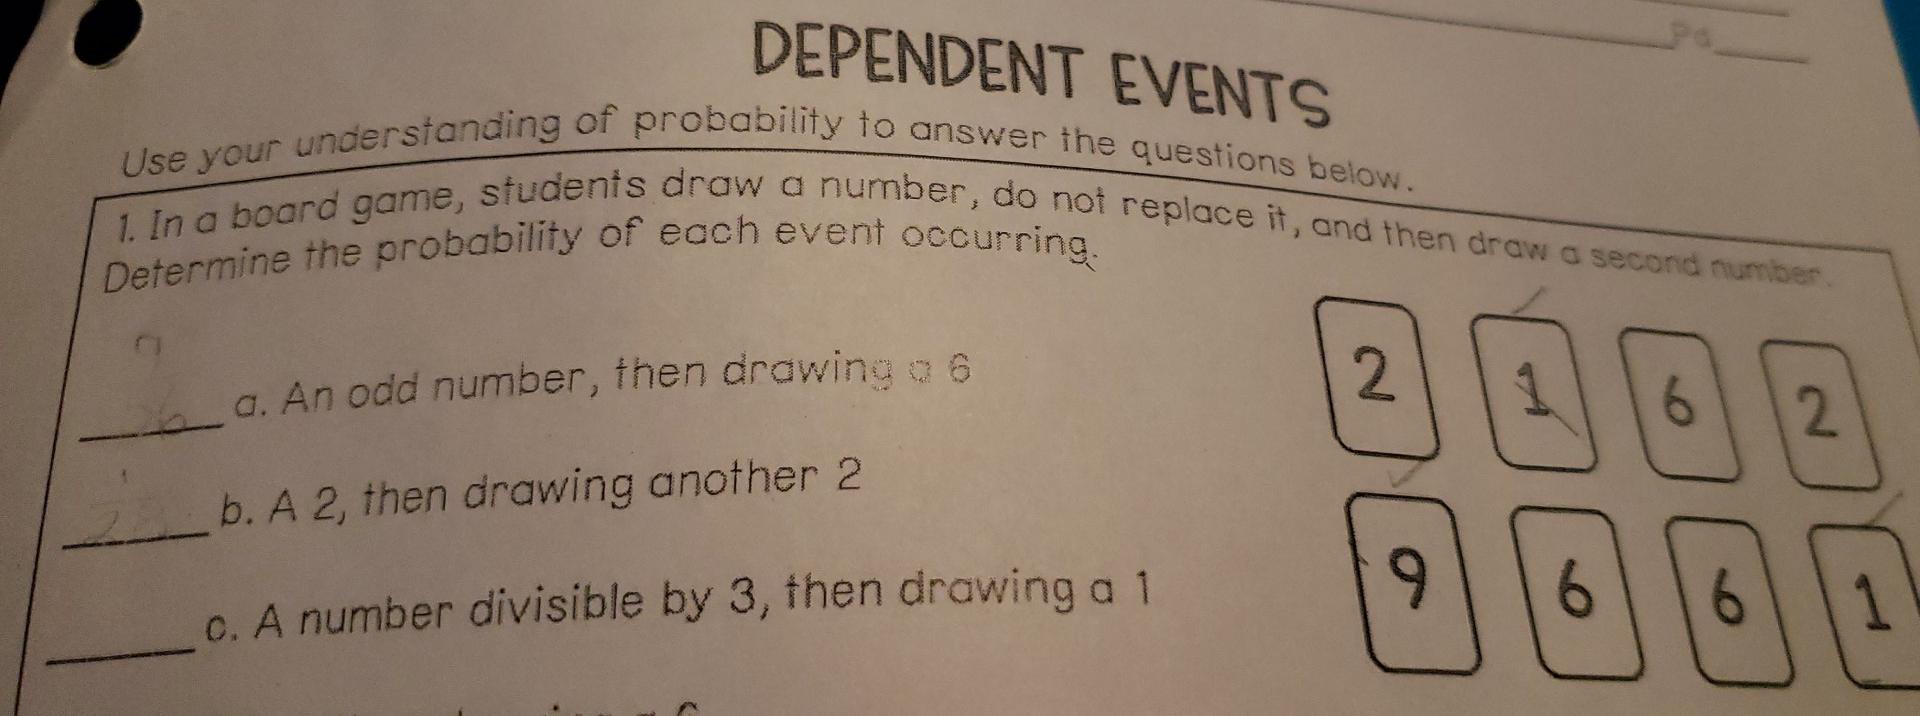 unit probability homework 6 dependent events answer key